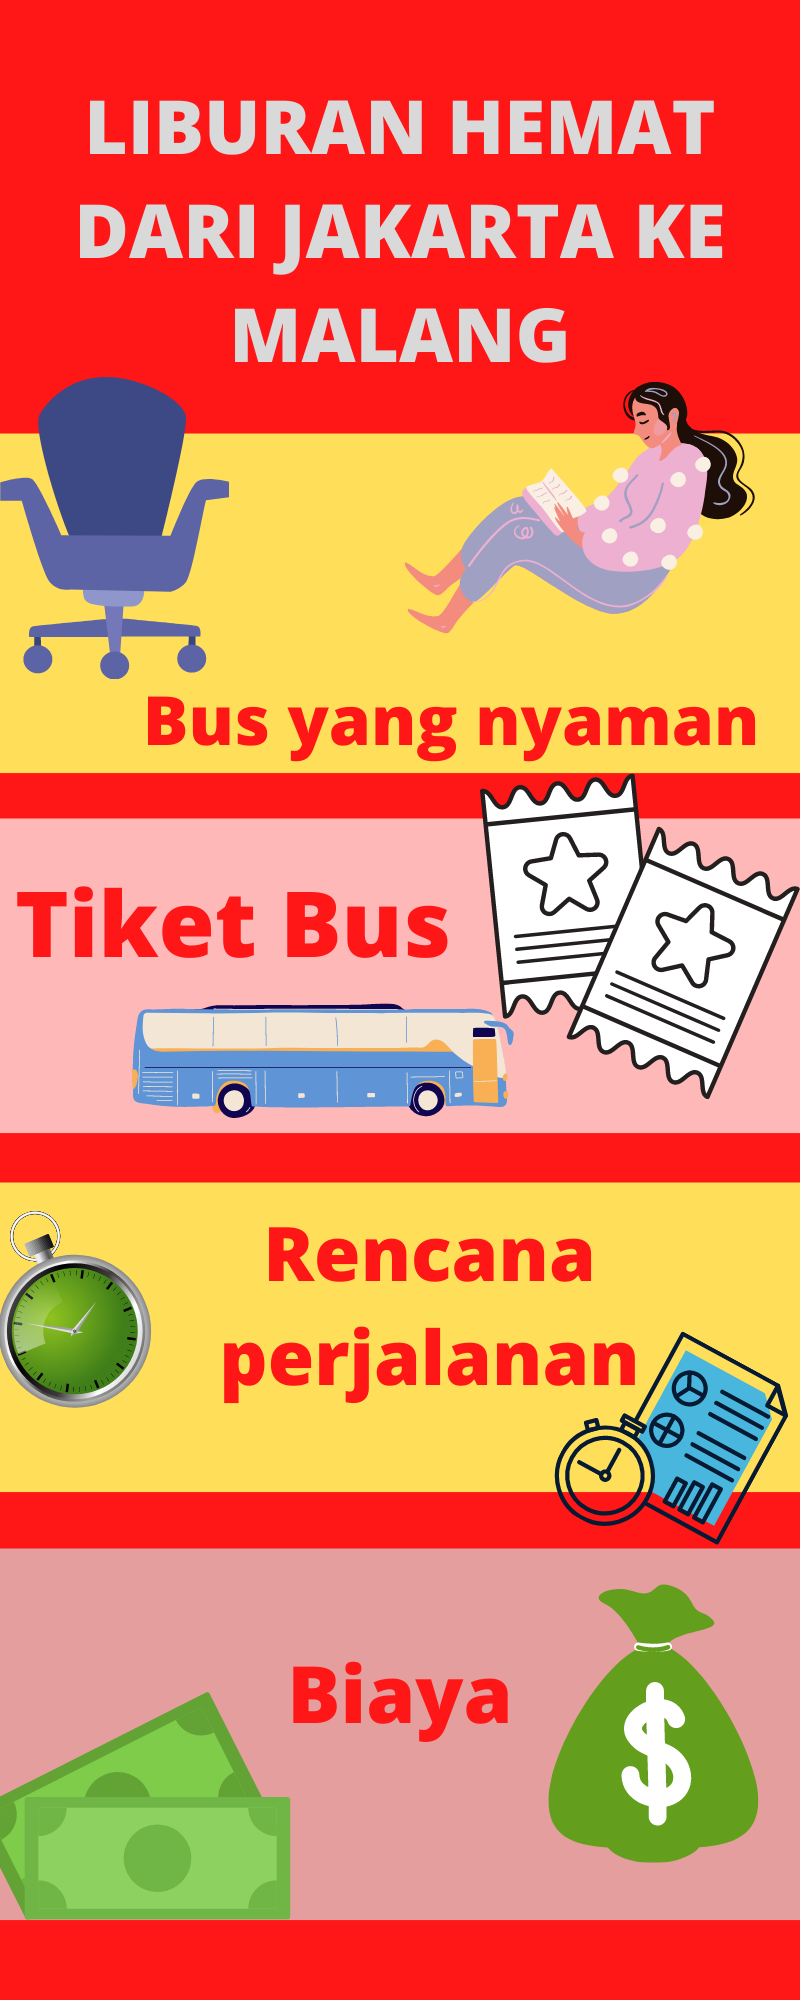 Bus Jakarta Malang